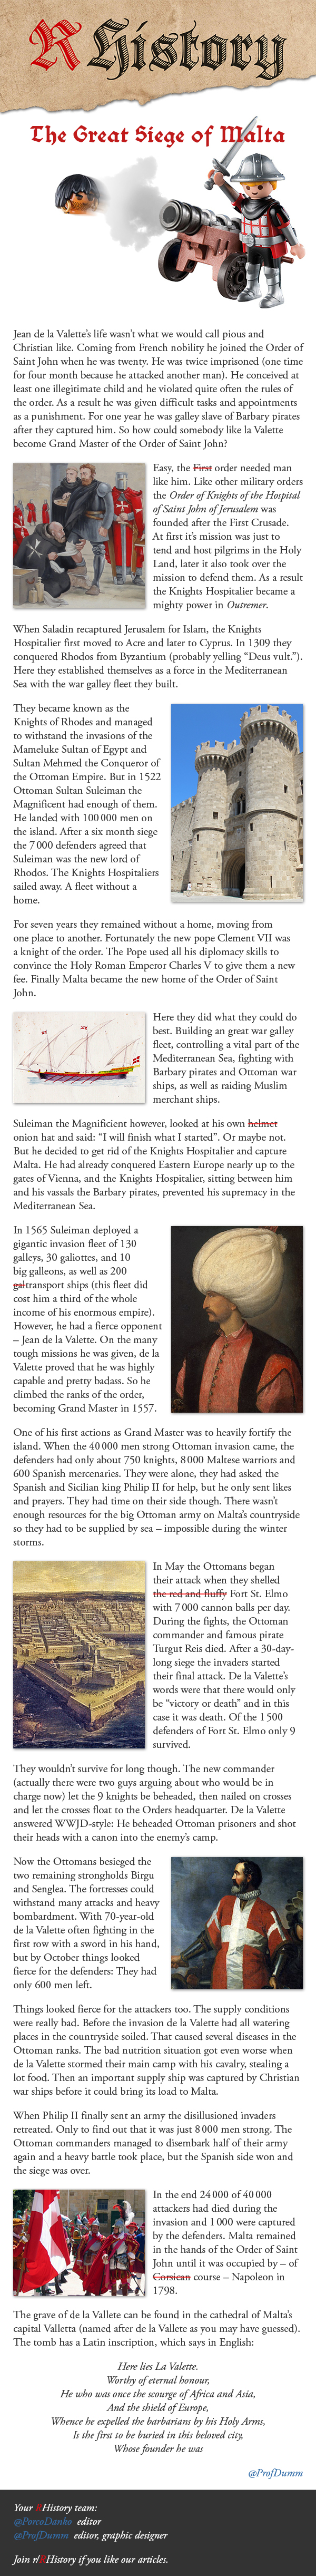 RHistory: The Great Siege of Malta | Scrolller